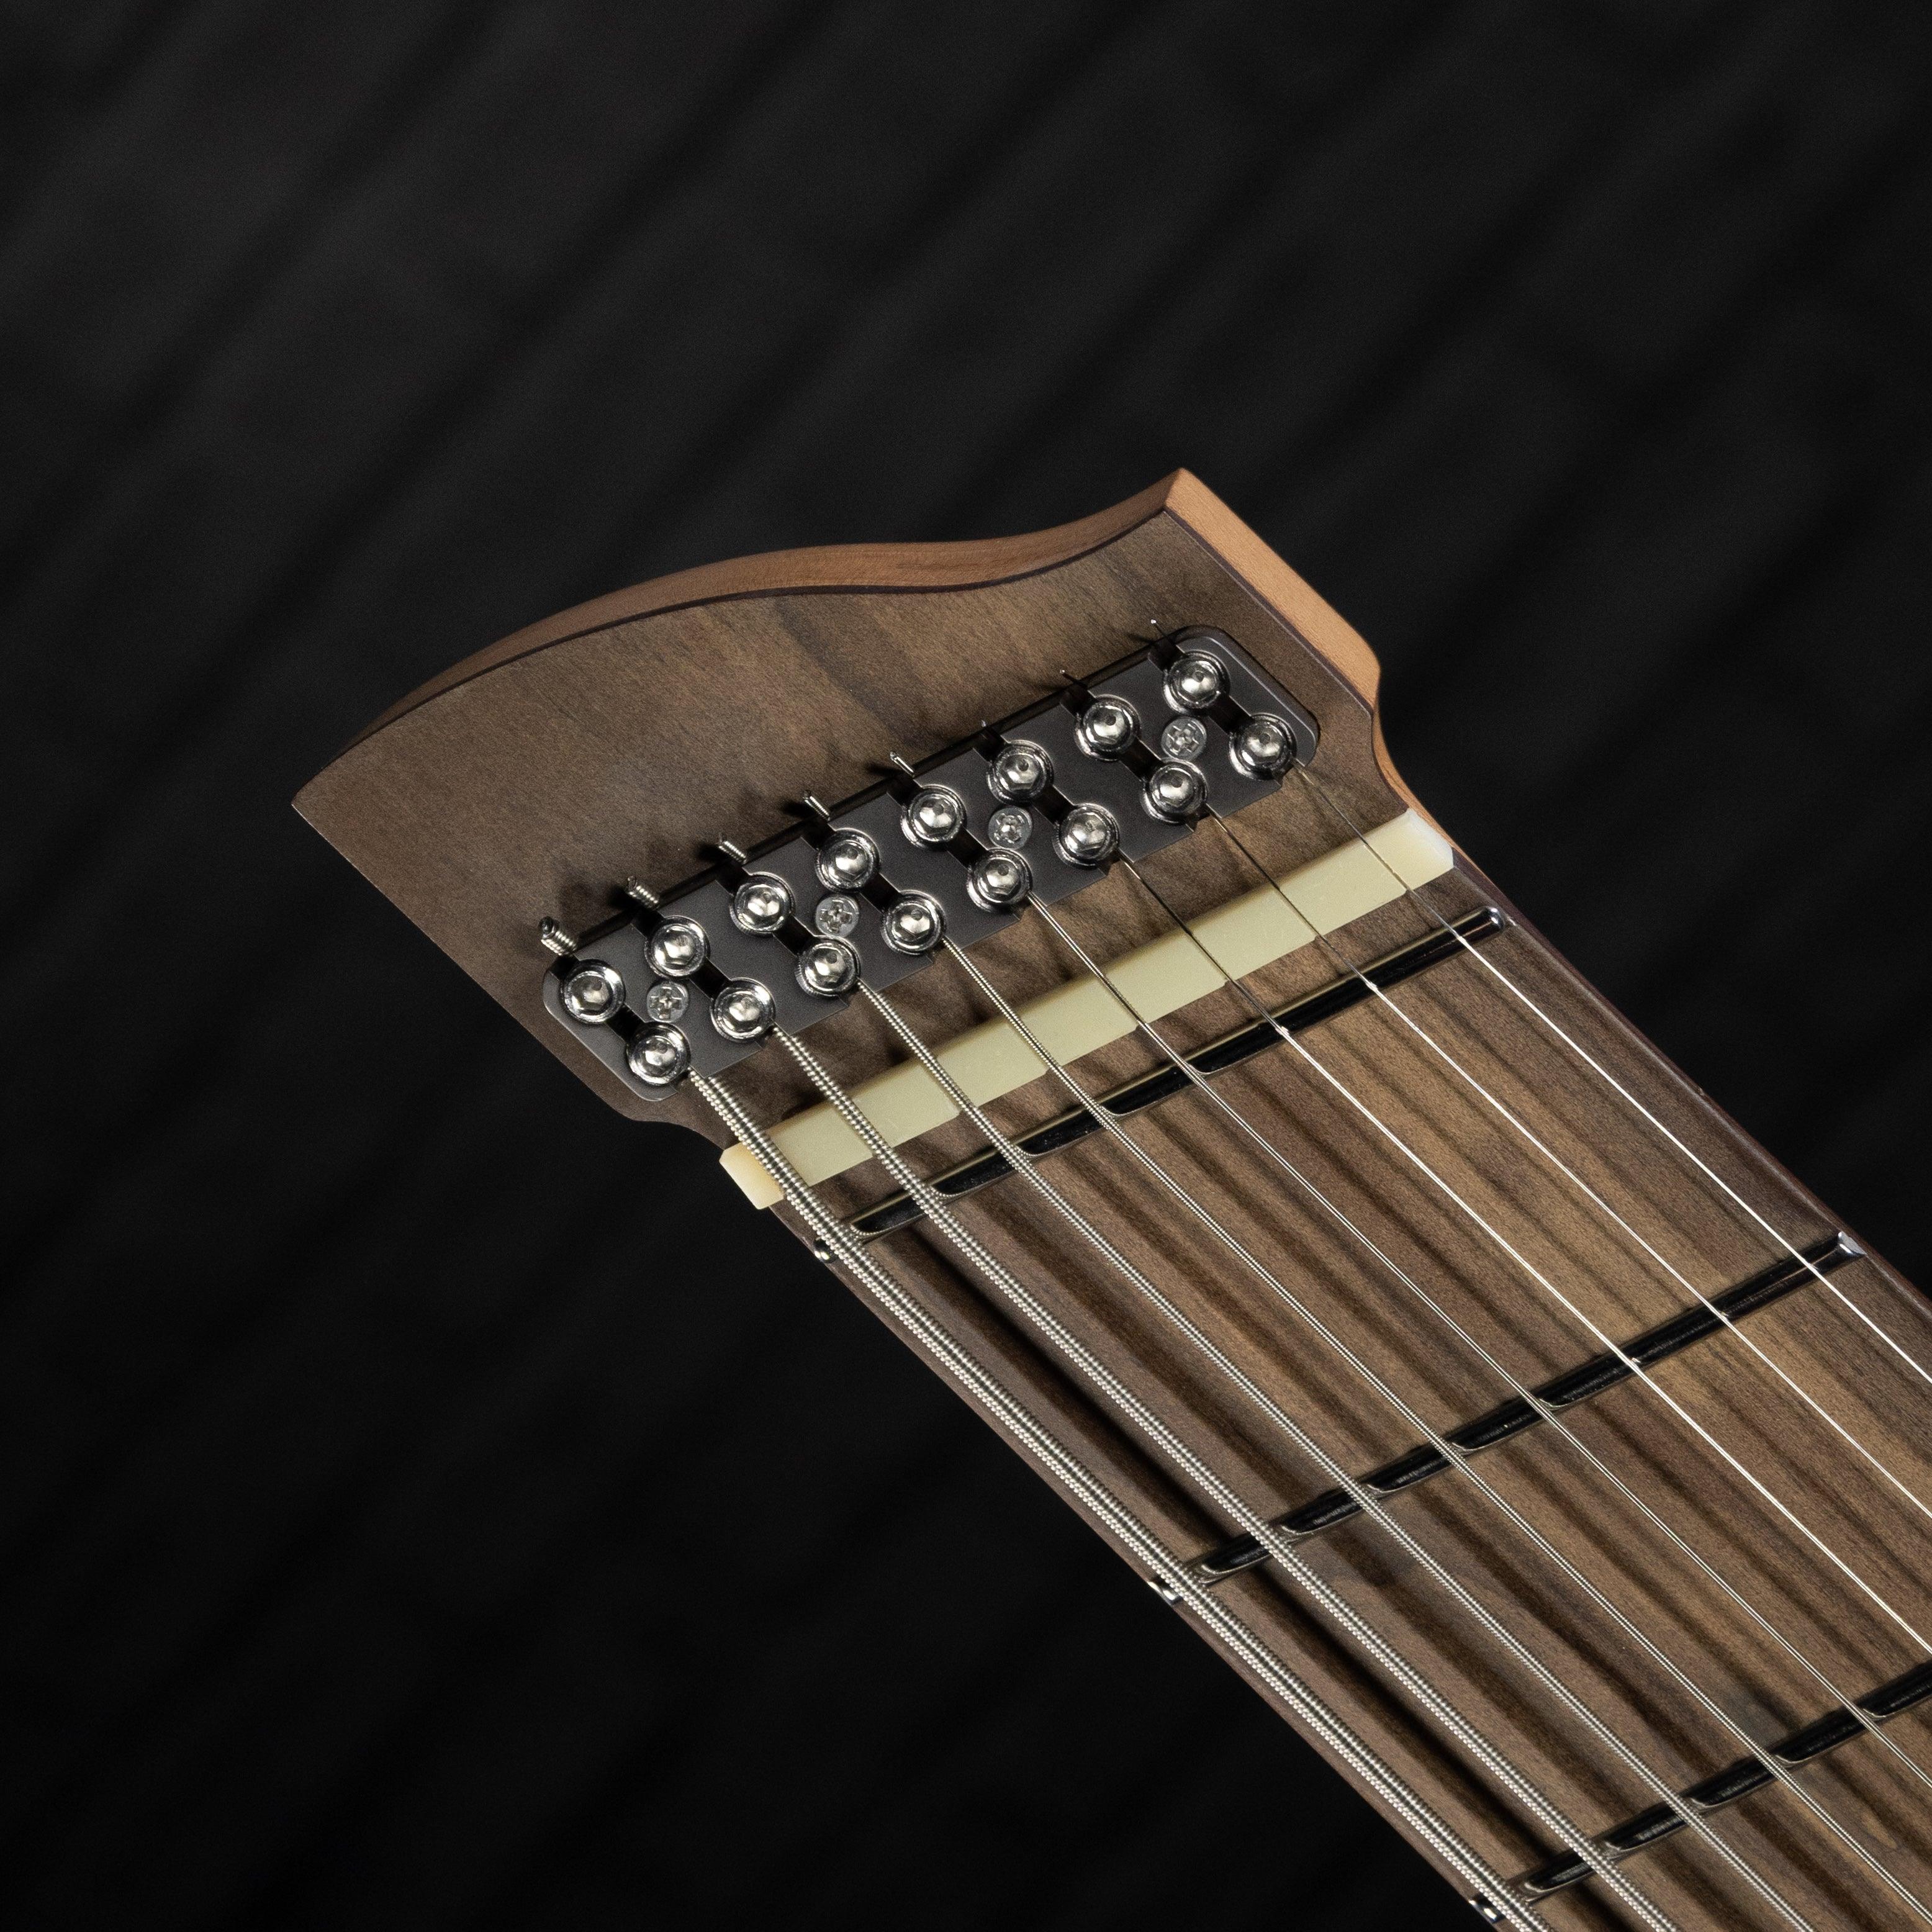 GOC Ilumina Headless Guitar 8 String IH8ROB (Relic Obsidian) - Impulse Music Co.